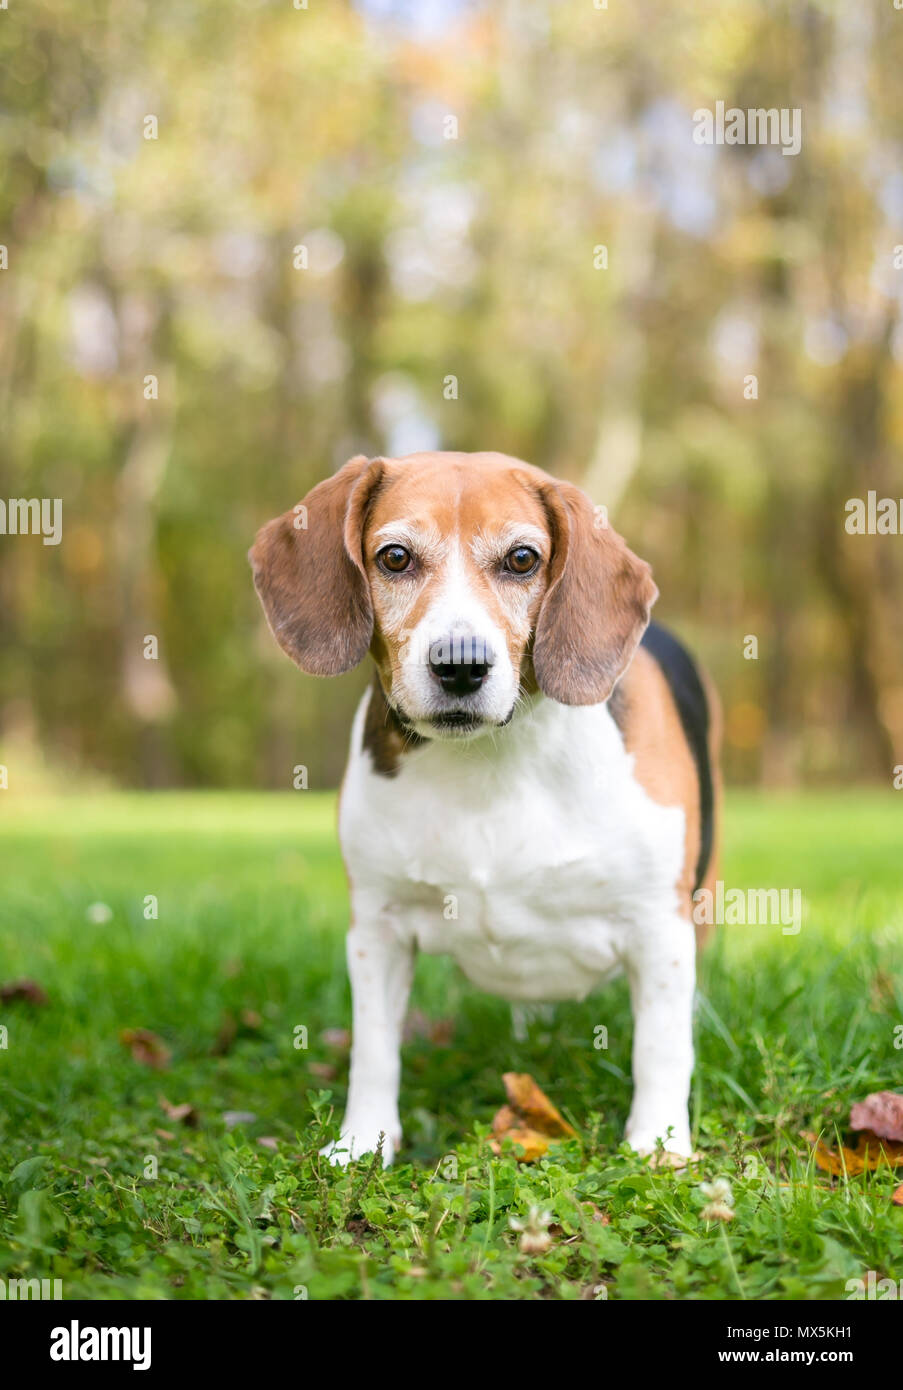 A tricolor Beagle dog outdoors Stock Photo